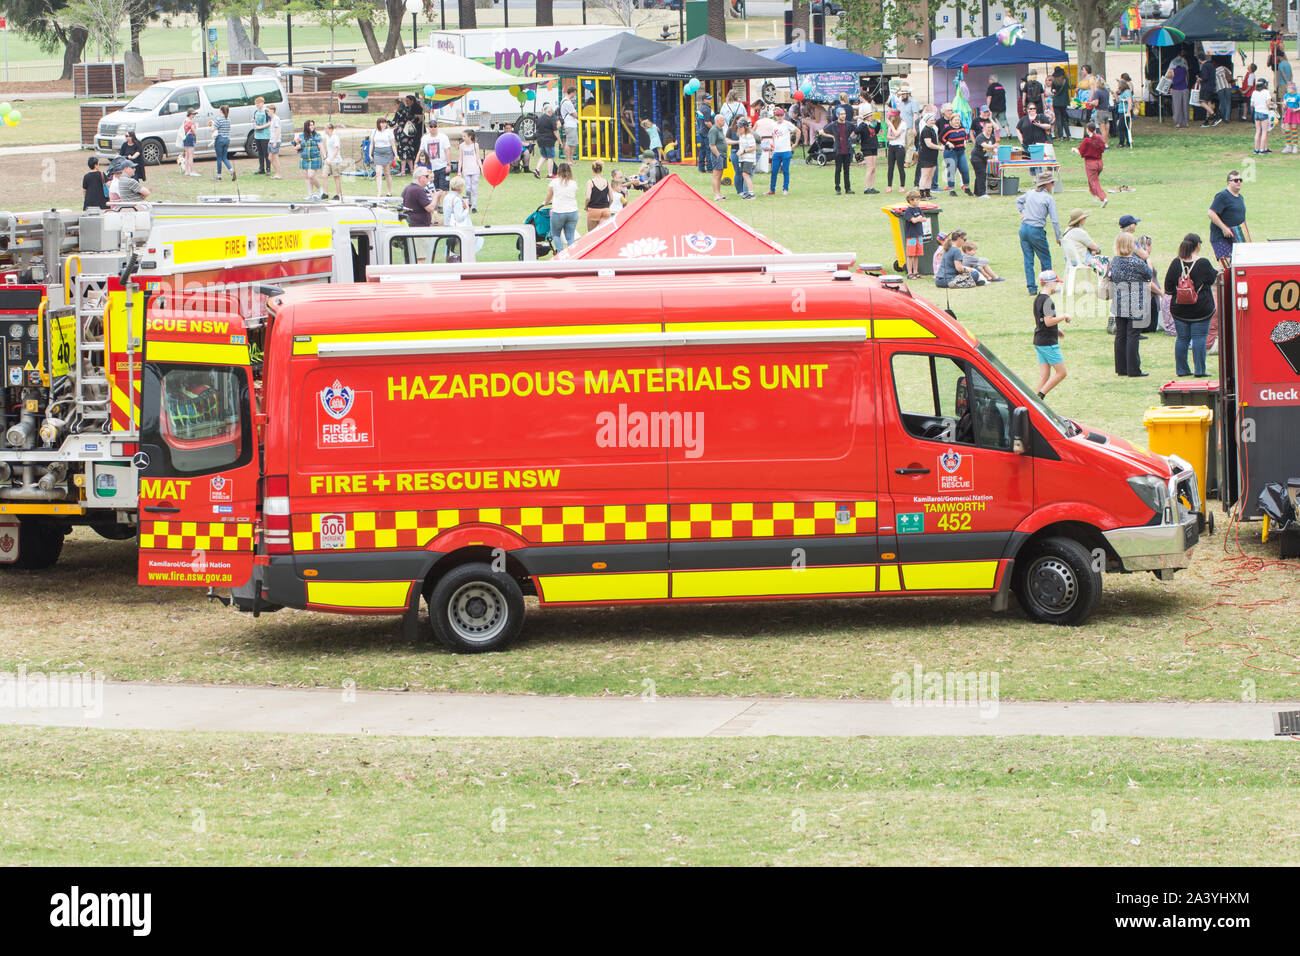 Hazardous Materials Unit NSW Australia Fire and Rescue Unit in a Mercedes-Benz panel van. Stock Photo